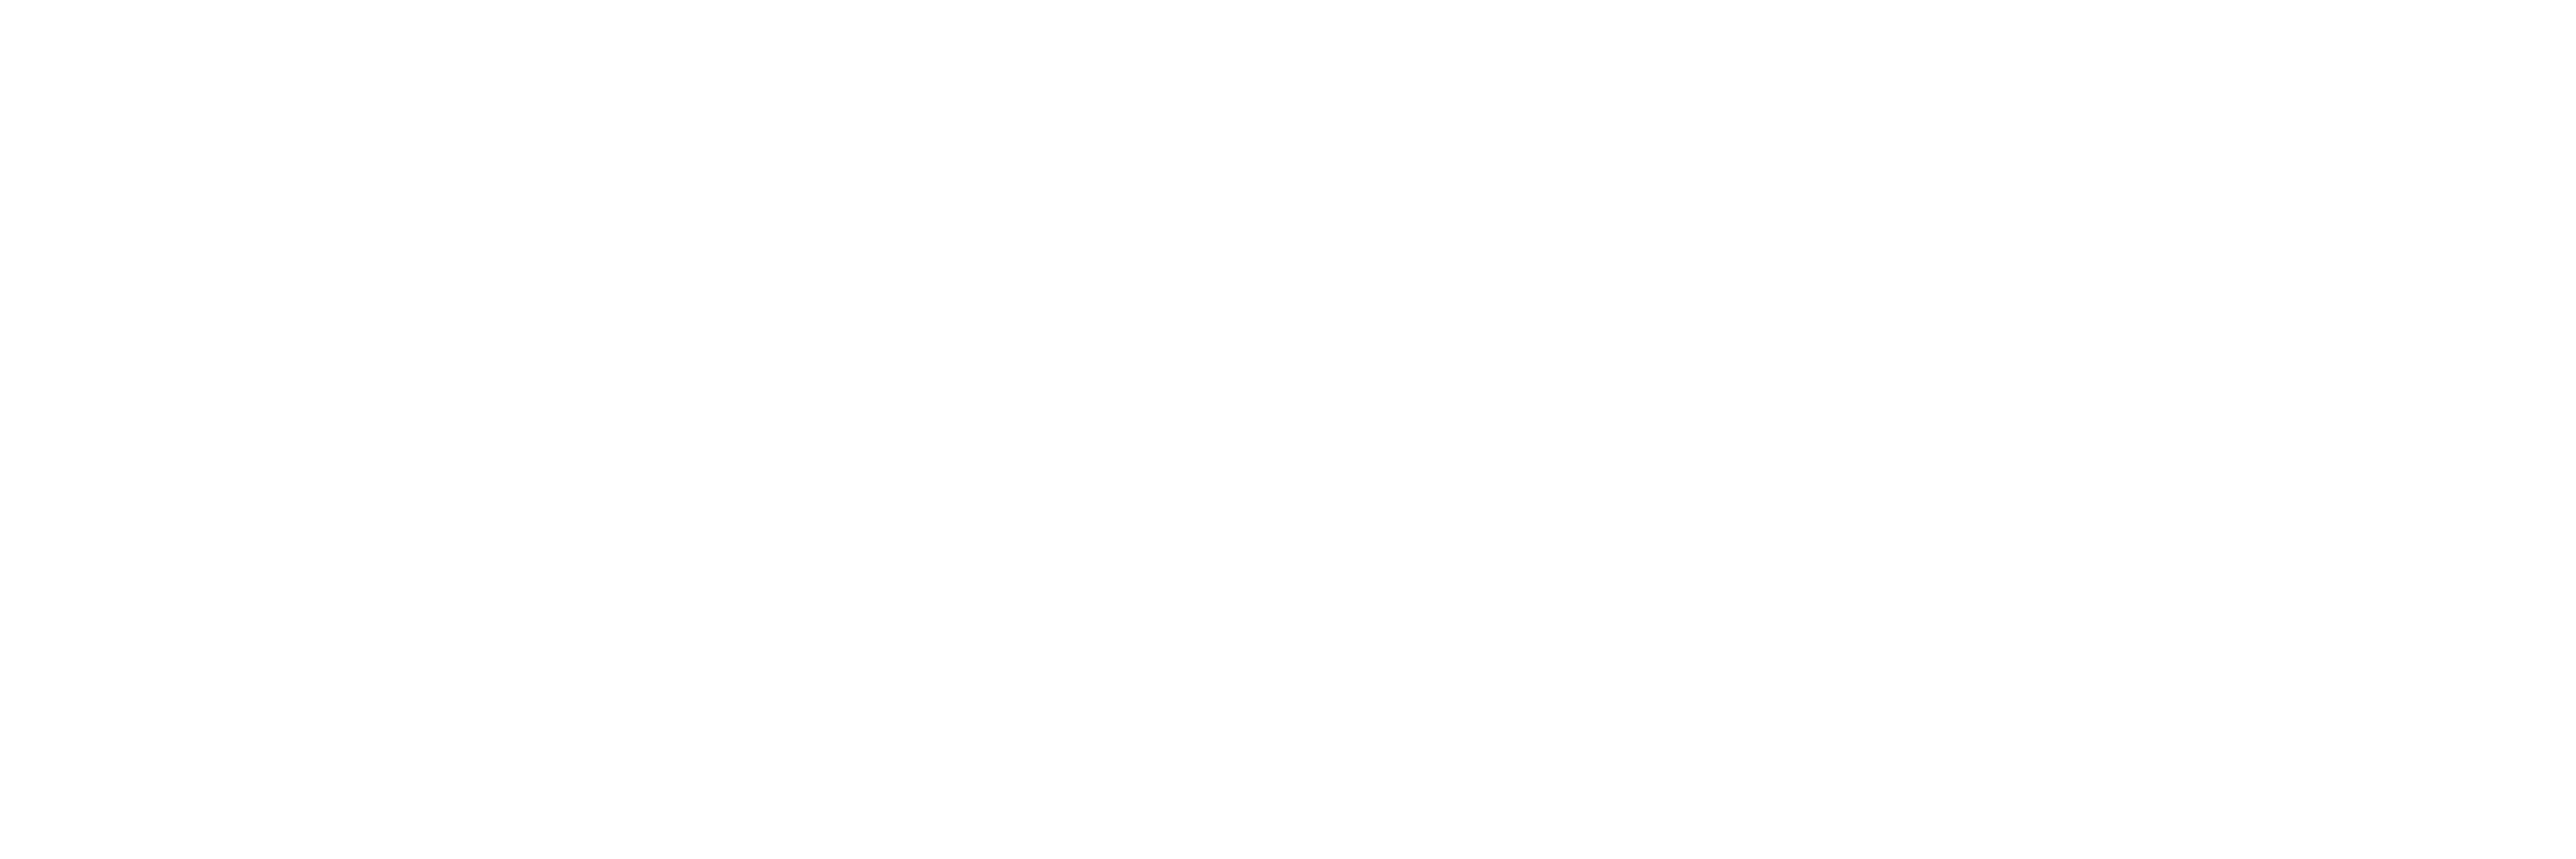 Byond Group Logo